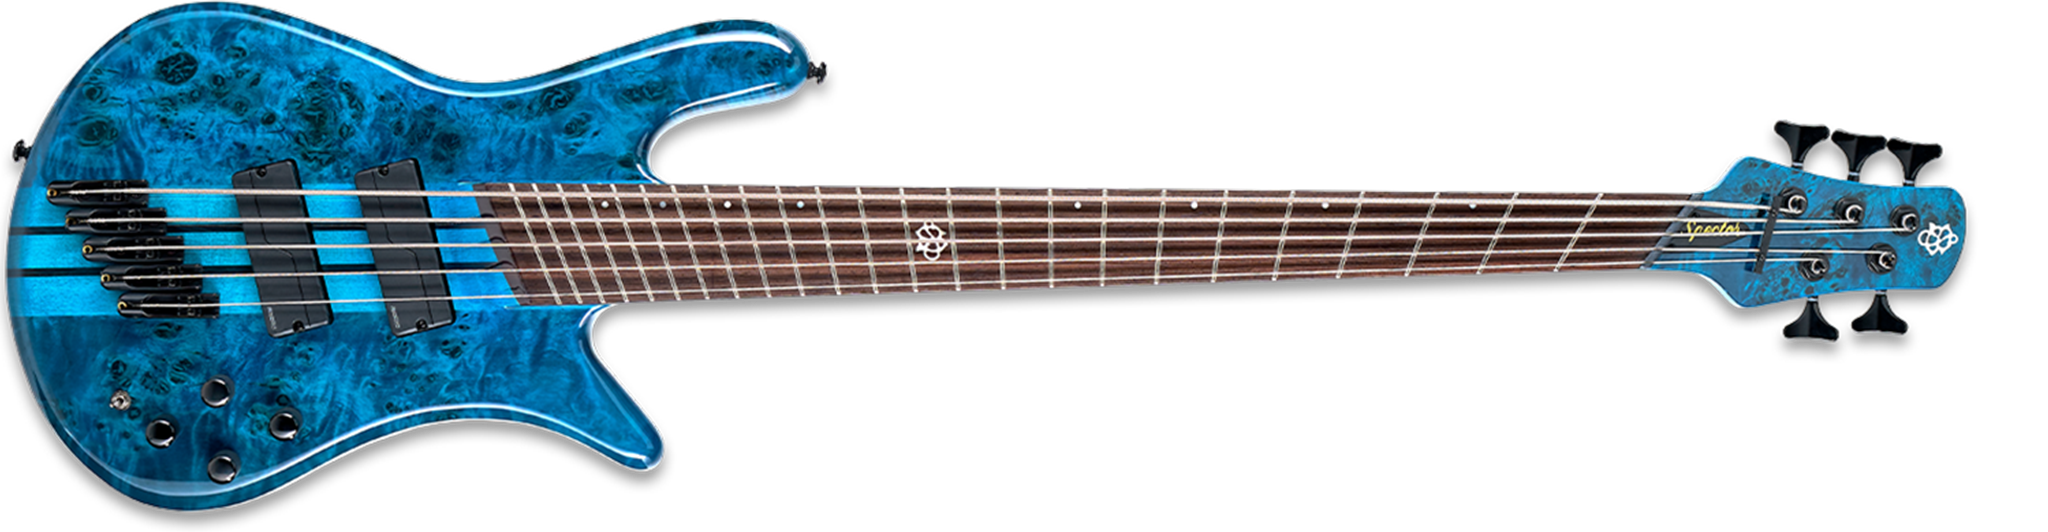 Spector NS Dimension 5 - Multi Scale -Black & Blue  5-String Bass Guitar  